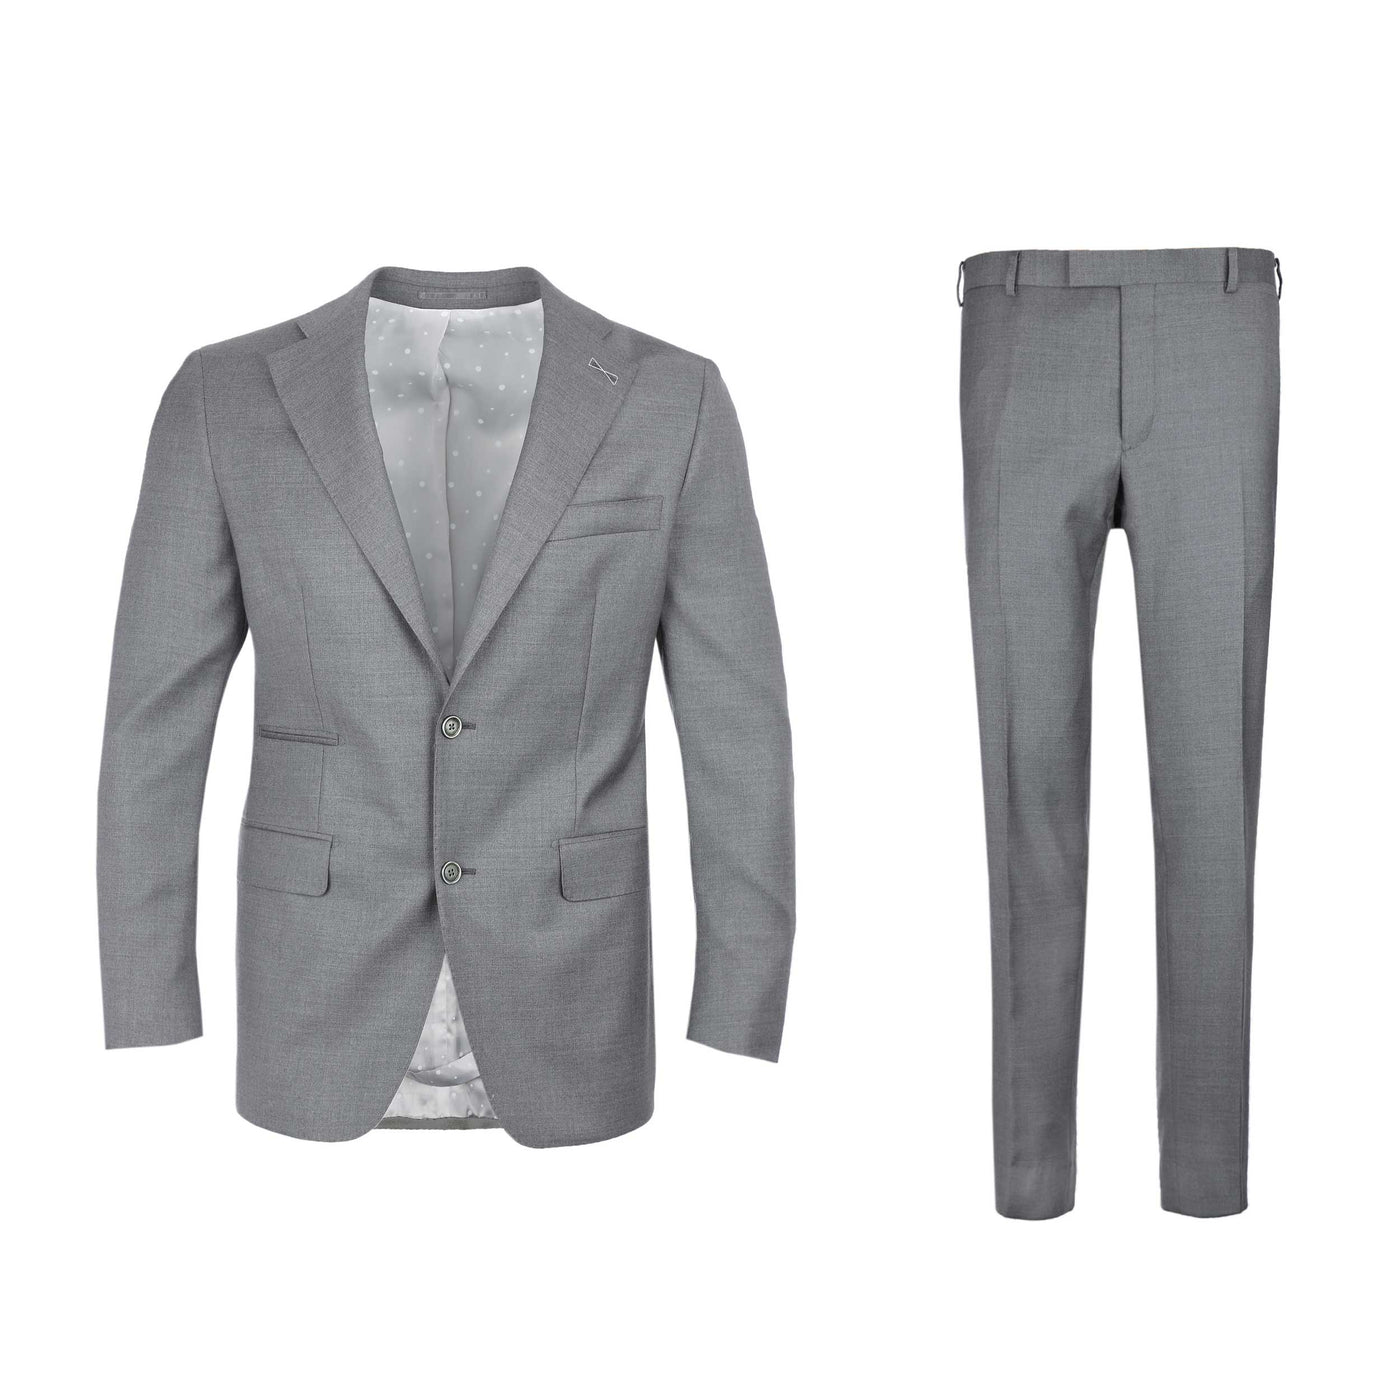 Norton Barrie Bespoke Suit in Mid Grey Lora Piana